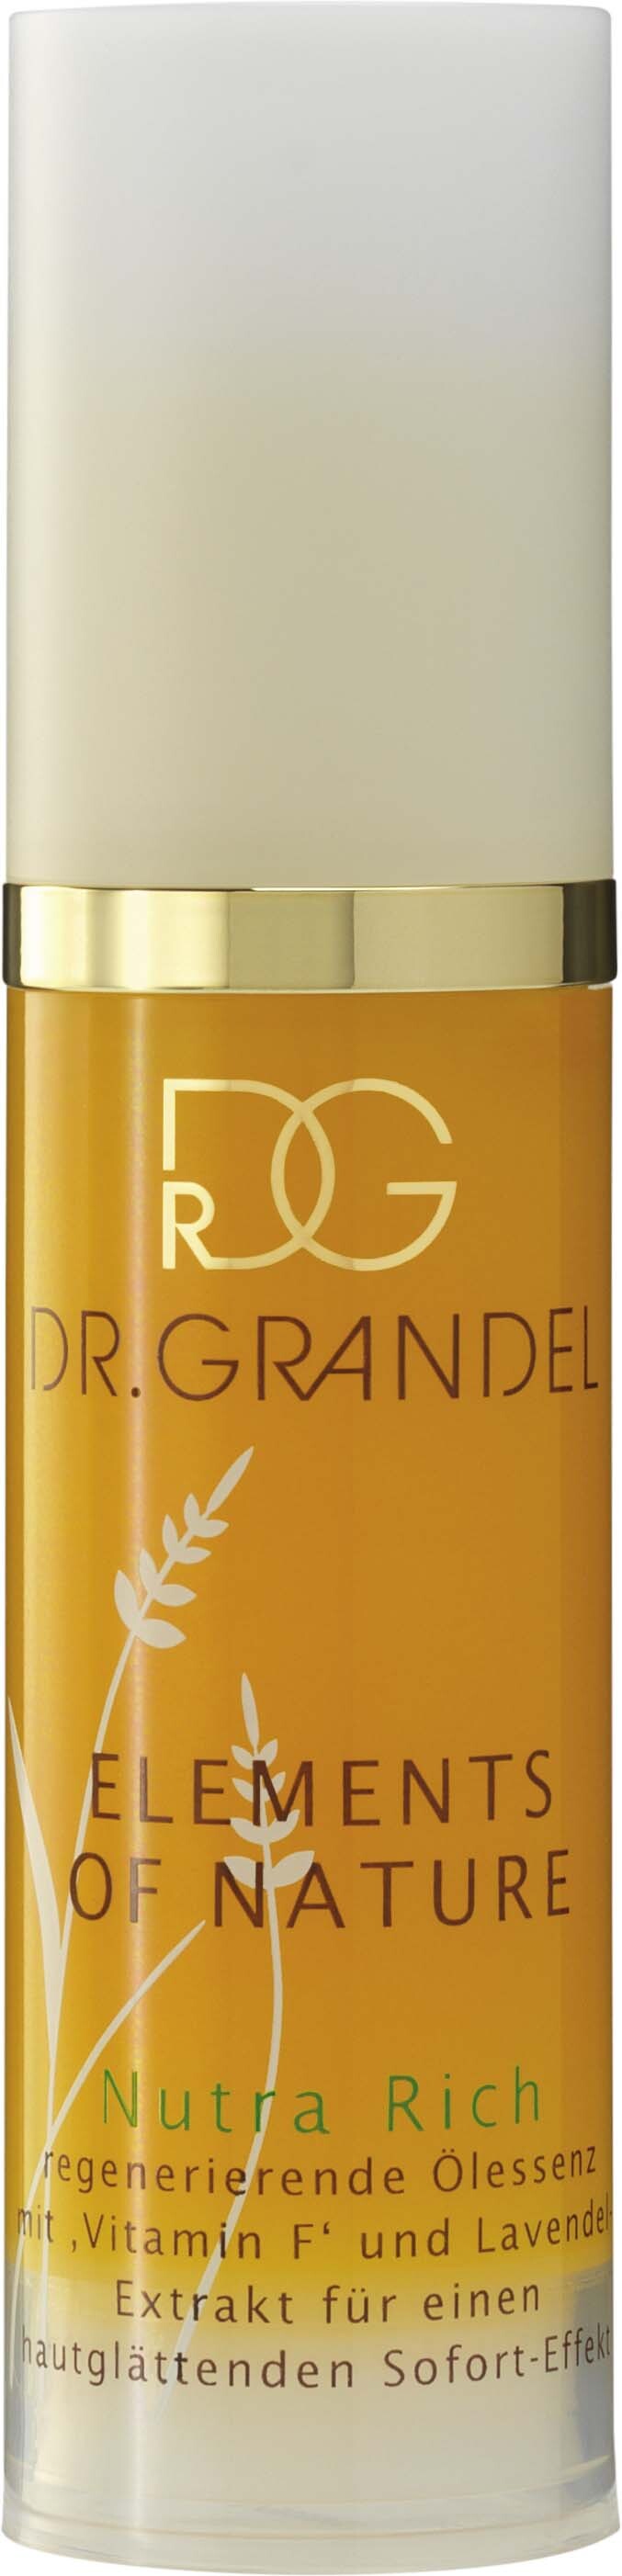 Dr. Grandel Elements of Nature - Eco & Natural Nutra Rich 30 ml